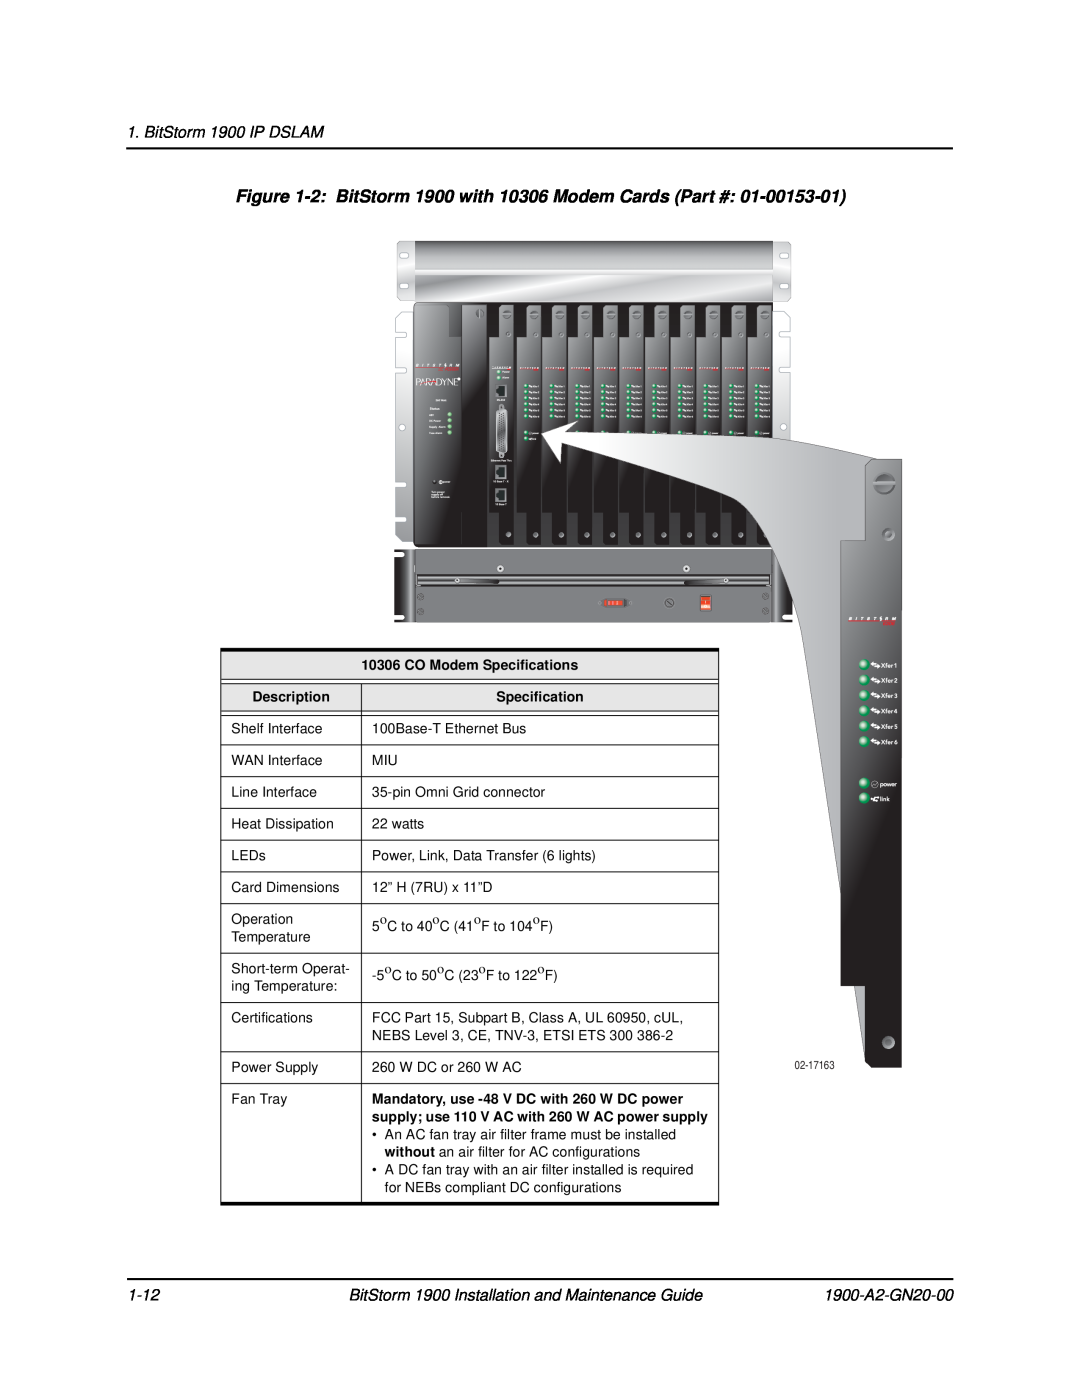 Paradyne 2 BitStorm 1900 with 10306 Modem Cards, BitStorm 1900 IP DSLAM, CO Modem Specifications, Description, 1-12 